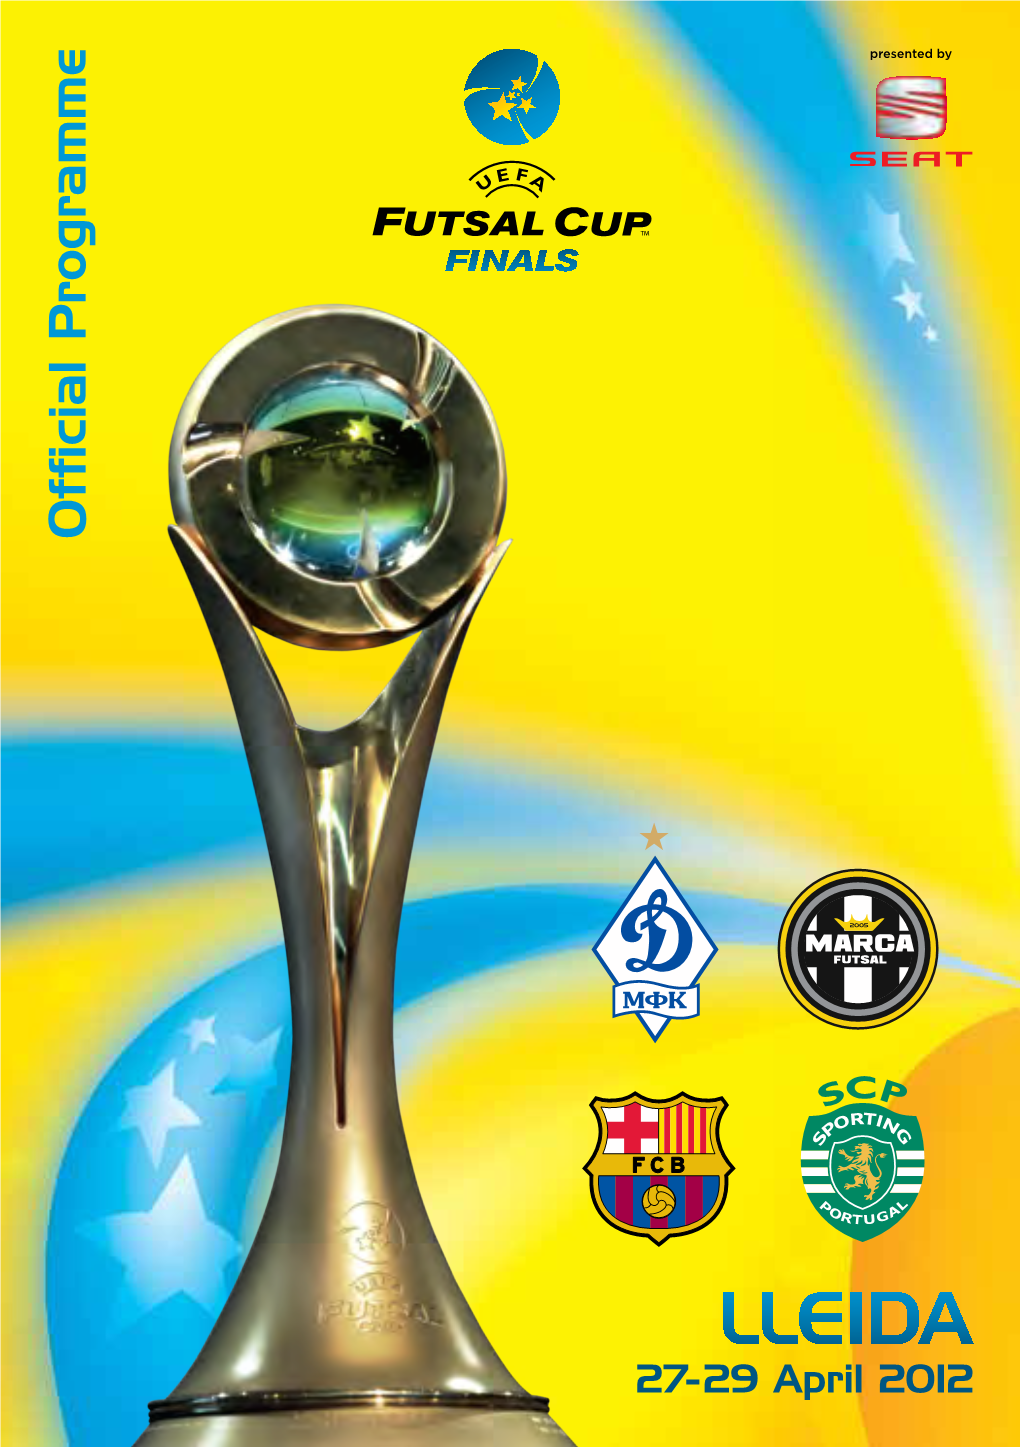 UEFA Futsal Cup Finals Programme